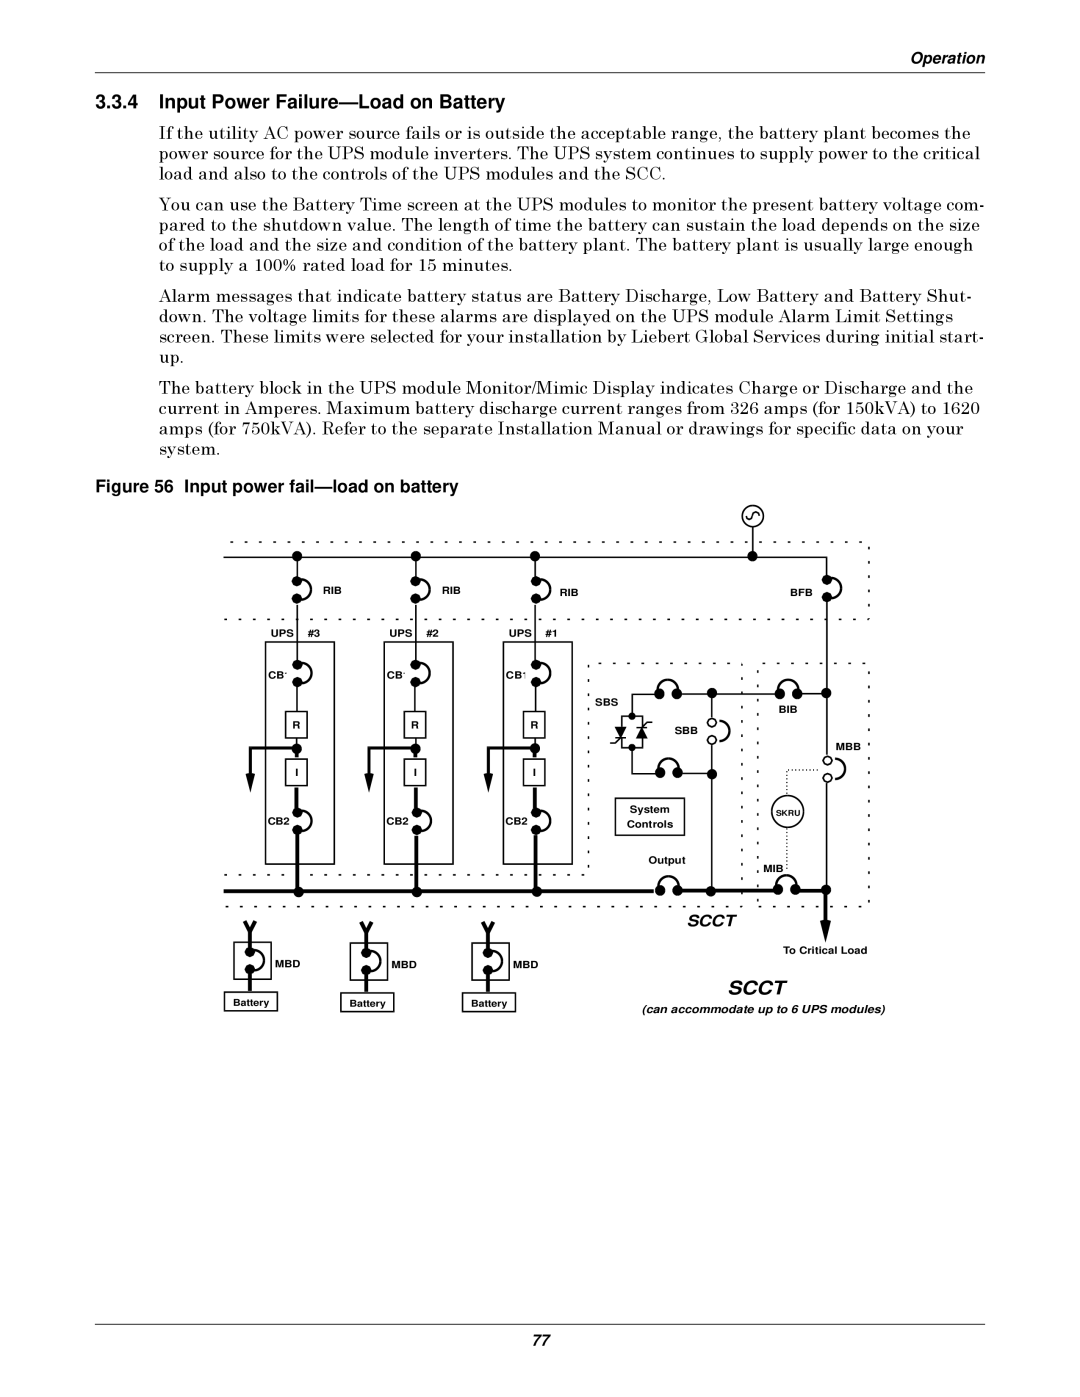 Emerson Series 610 manual Input Power Failure-Load on Battery, Scct, Input power fail-load on battery 